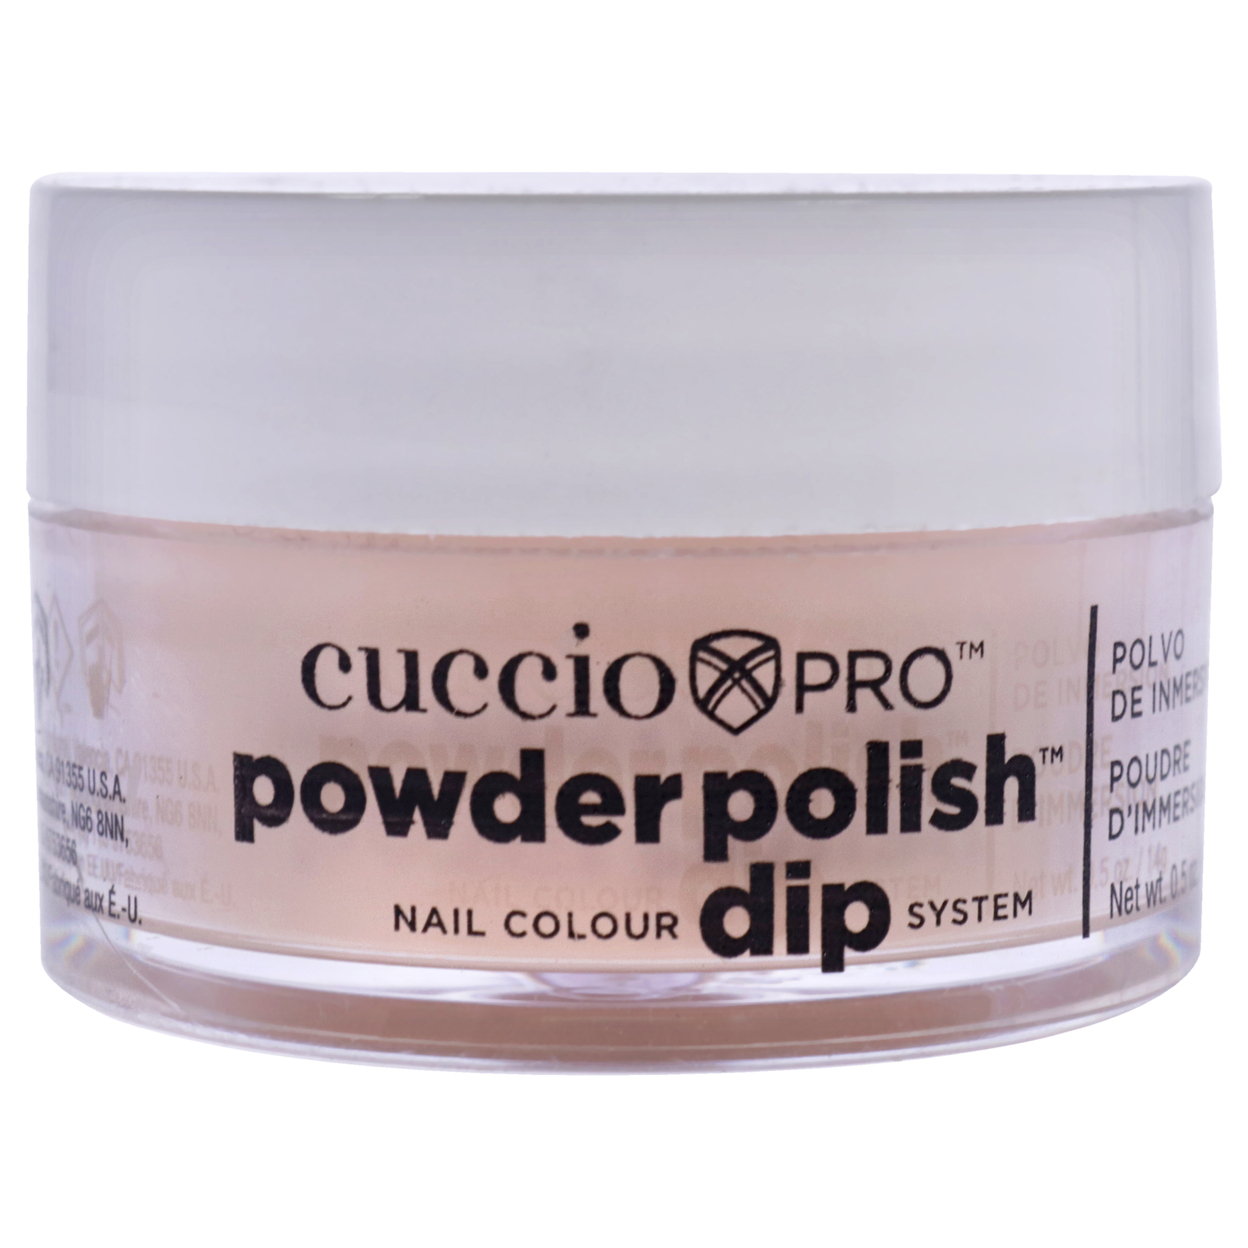 Cuccio Pro Pro Powder Polish Nail Colour Dip System - Flattering Peach Nail Powder 0.5 Oz